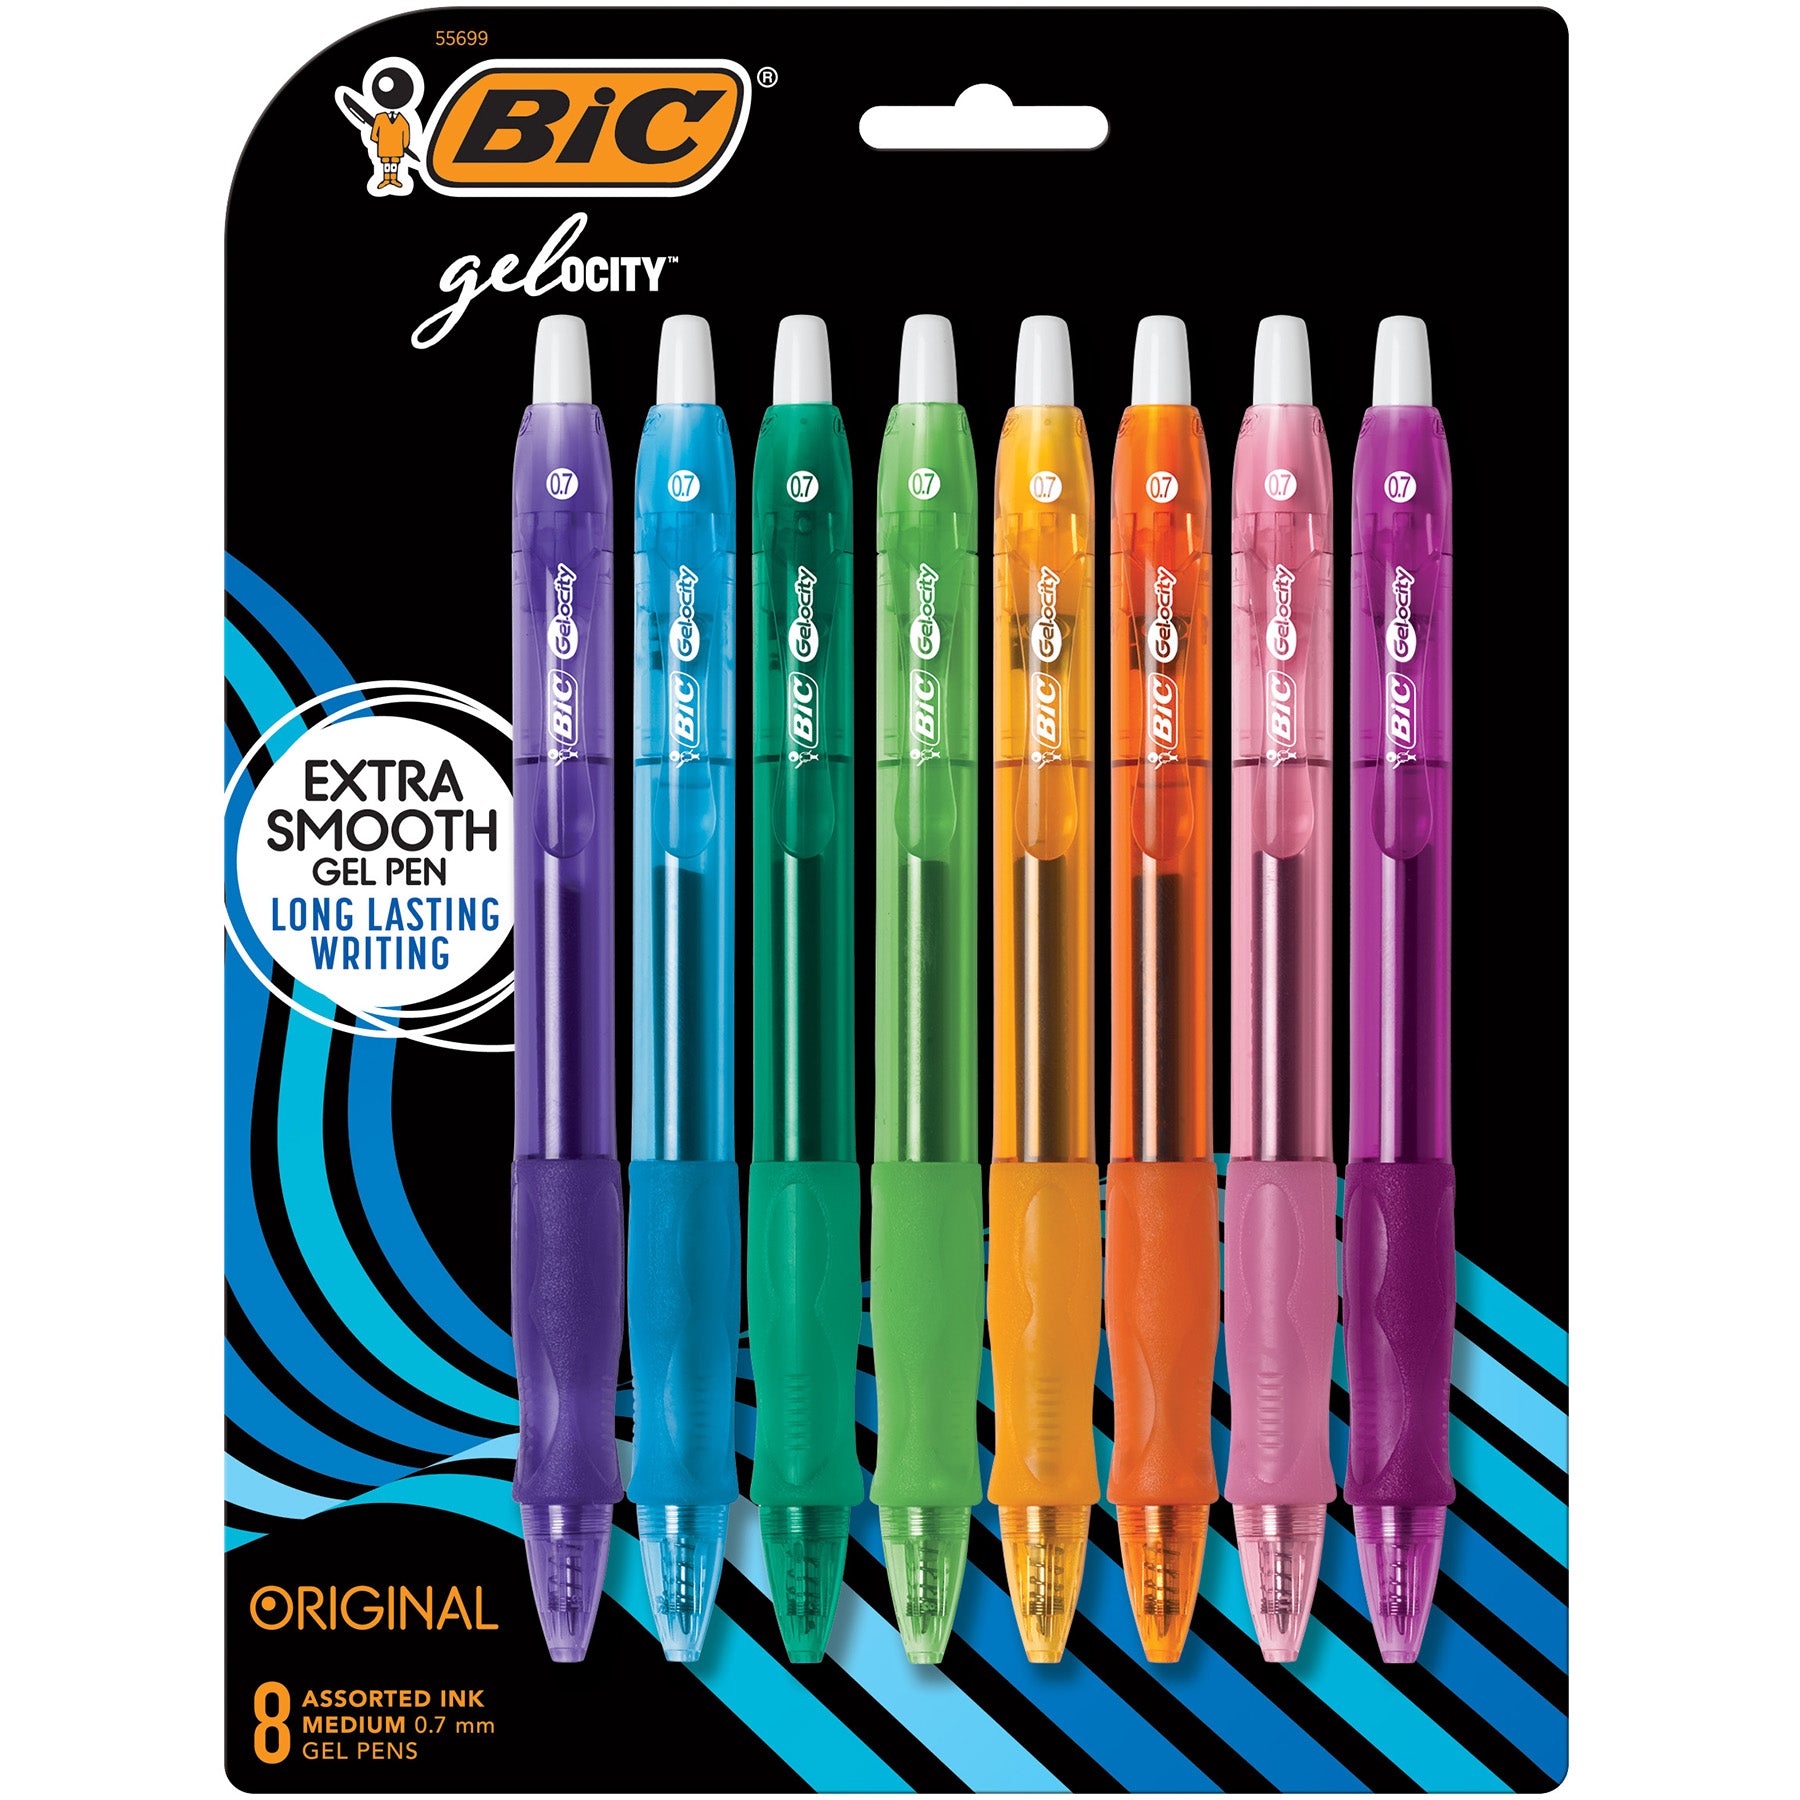 Gelocity Original Long Lasting Fashion Gel Pens, Medium Point (0.7mm) Assorted Ink, 8 Per Pack, 3 Packs